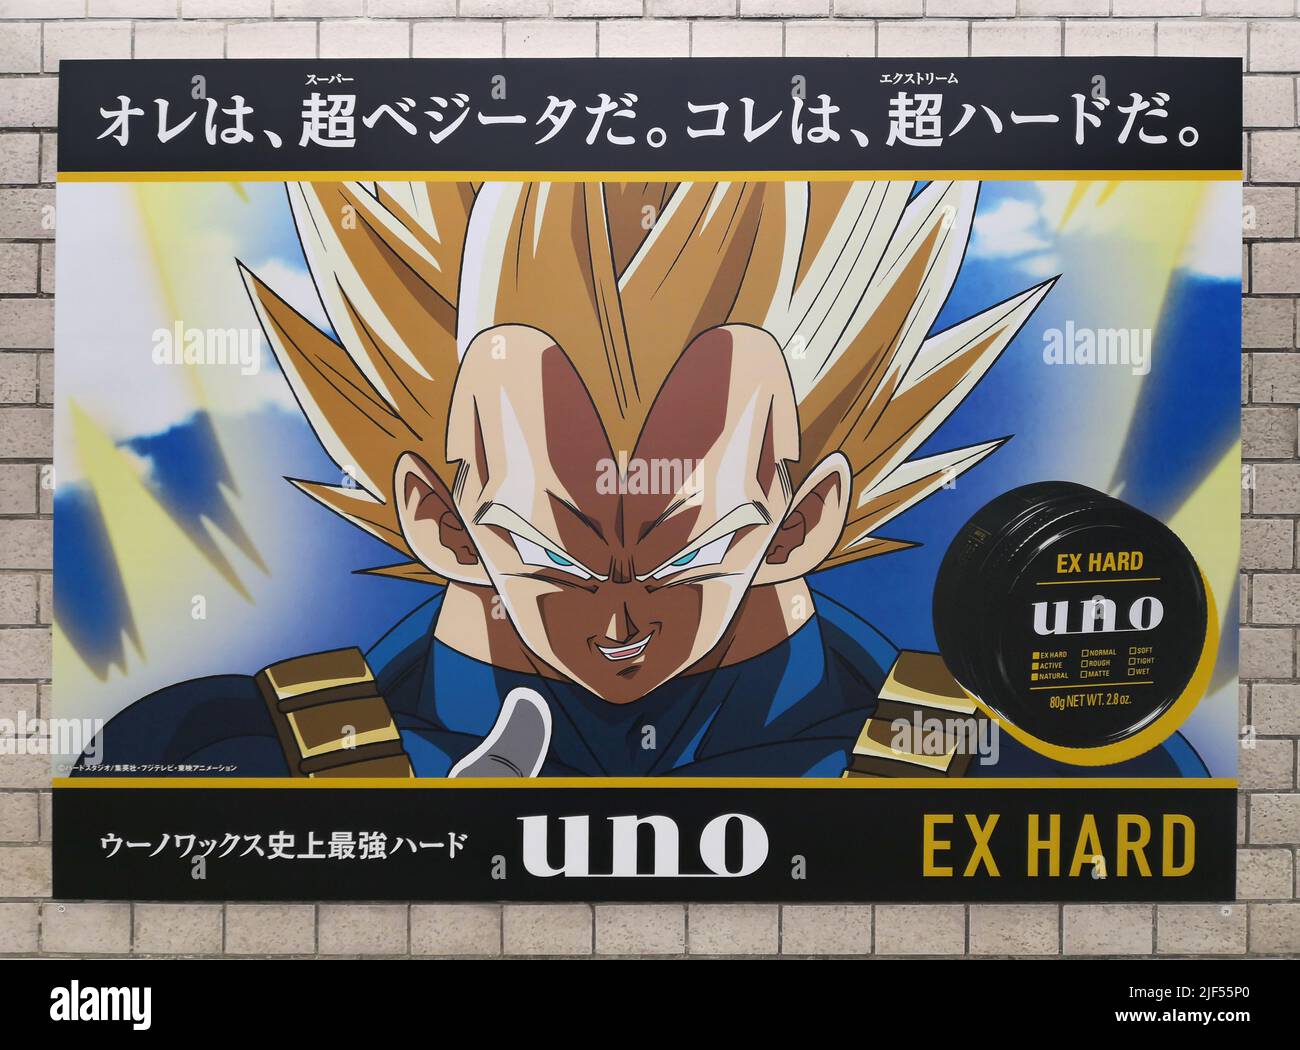 tokyo, japan - december 15 2018: Japanese Dragon Ball Z poster of anime and  manga character Vegeta in super saiyan golden color saying 